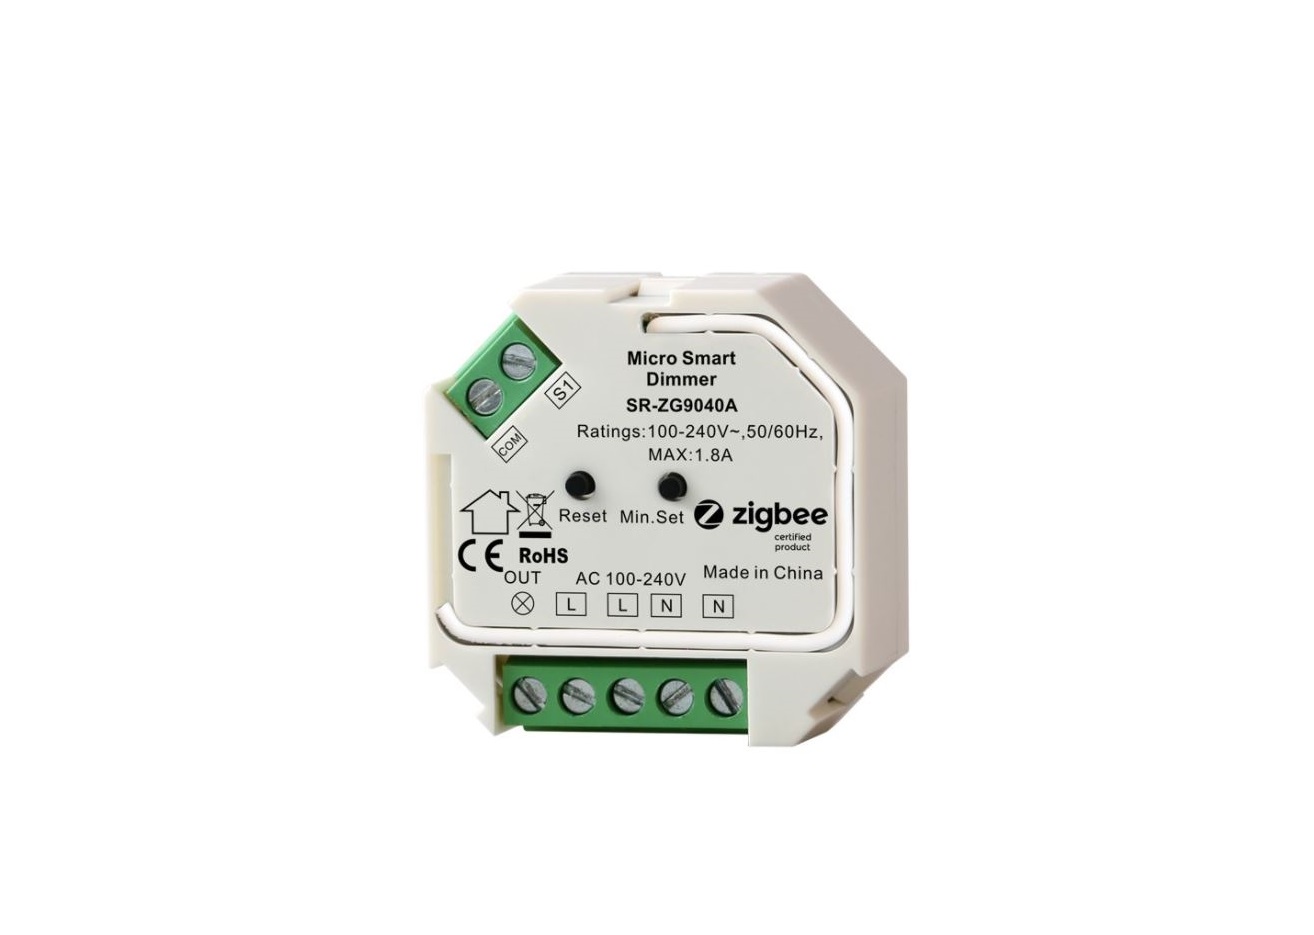 ZigBee SR-ZG9040A-S Micro Smart Dimmer Instructions